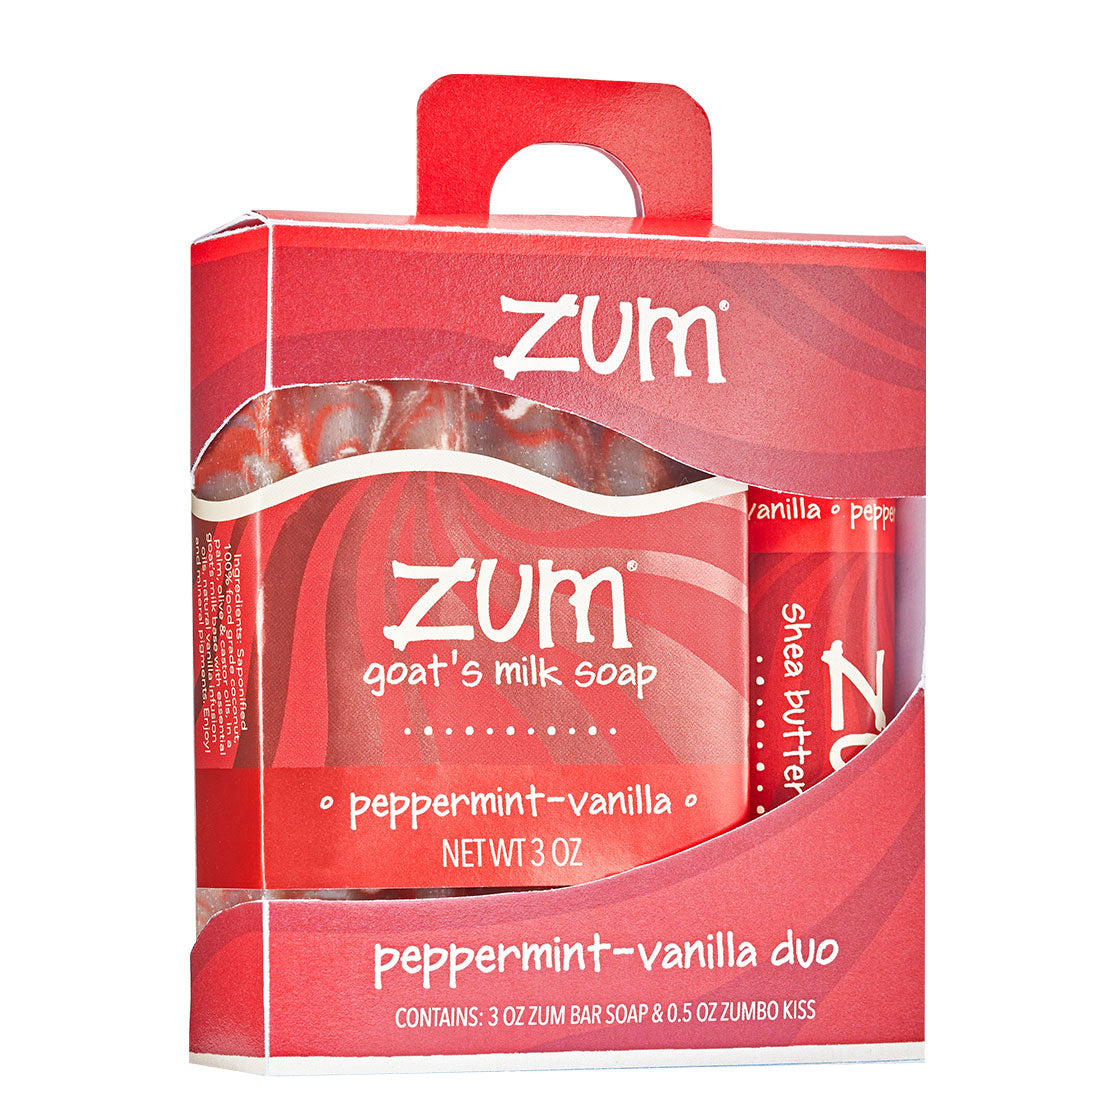 Peppermint-Vanilla Zum Bar and Lip Balm in a red gift box